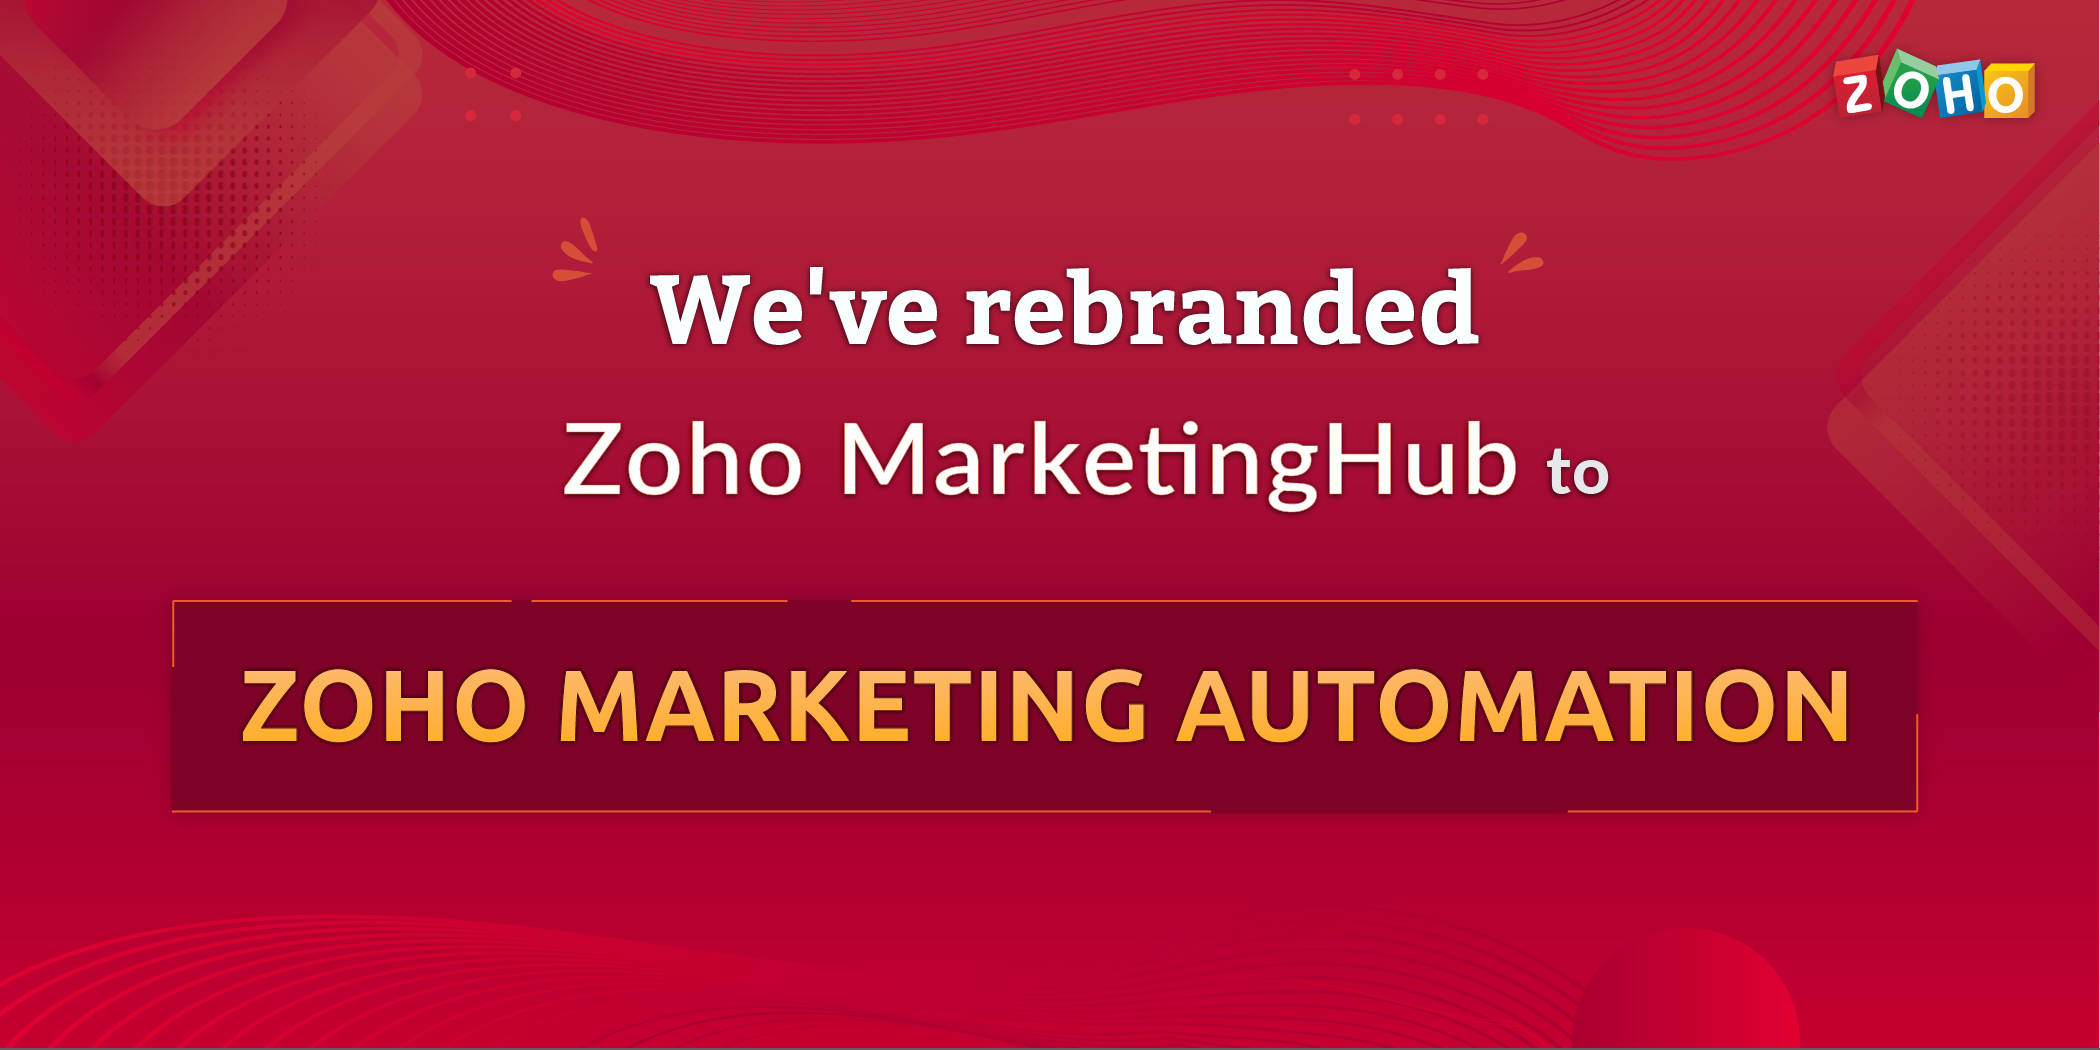 Zoho MarketingHub is now Zoho Marketing Automation